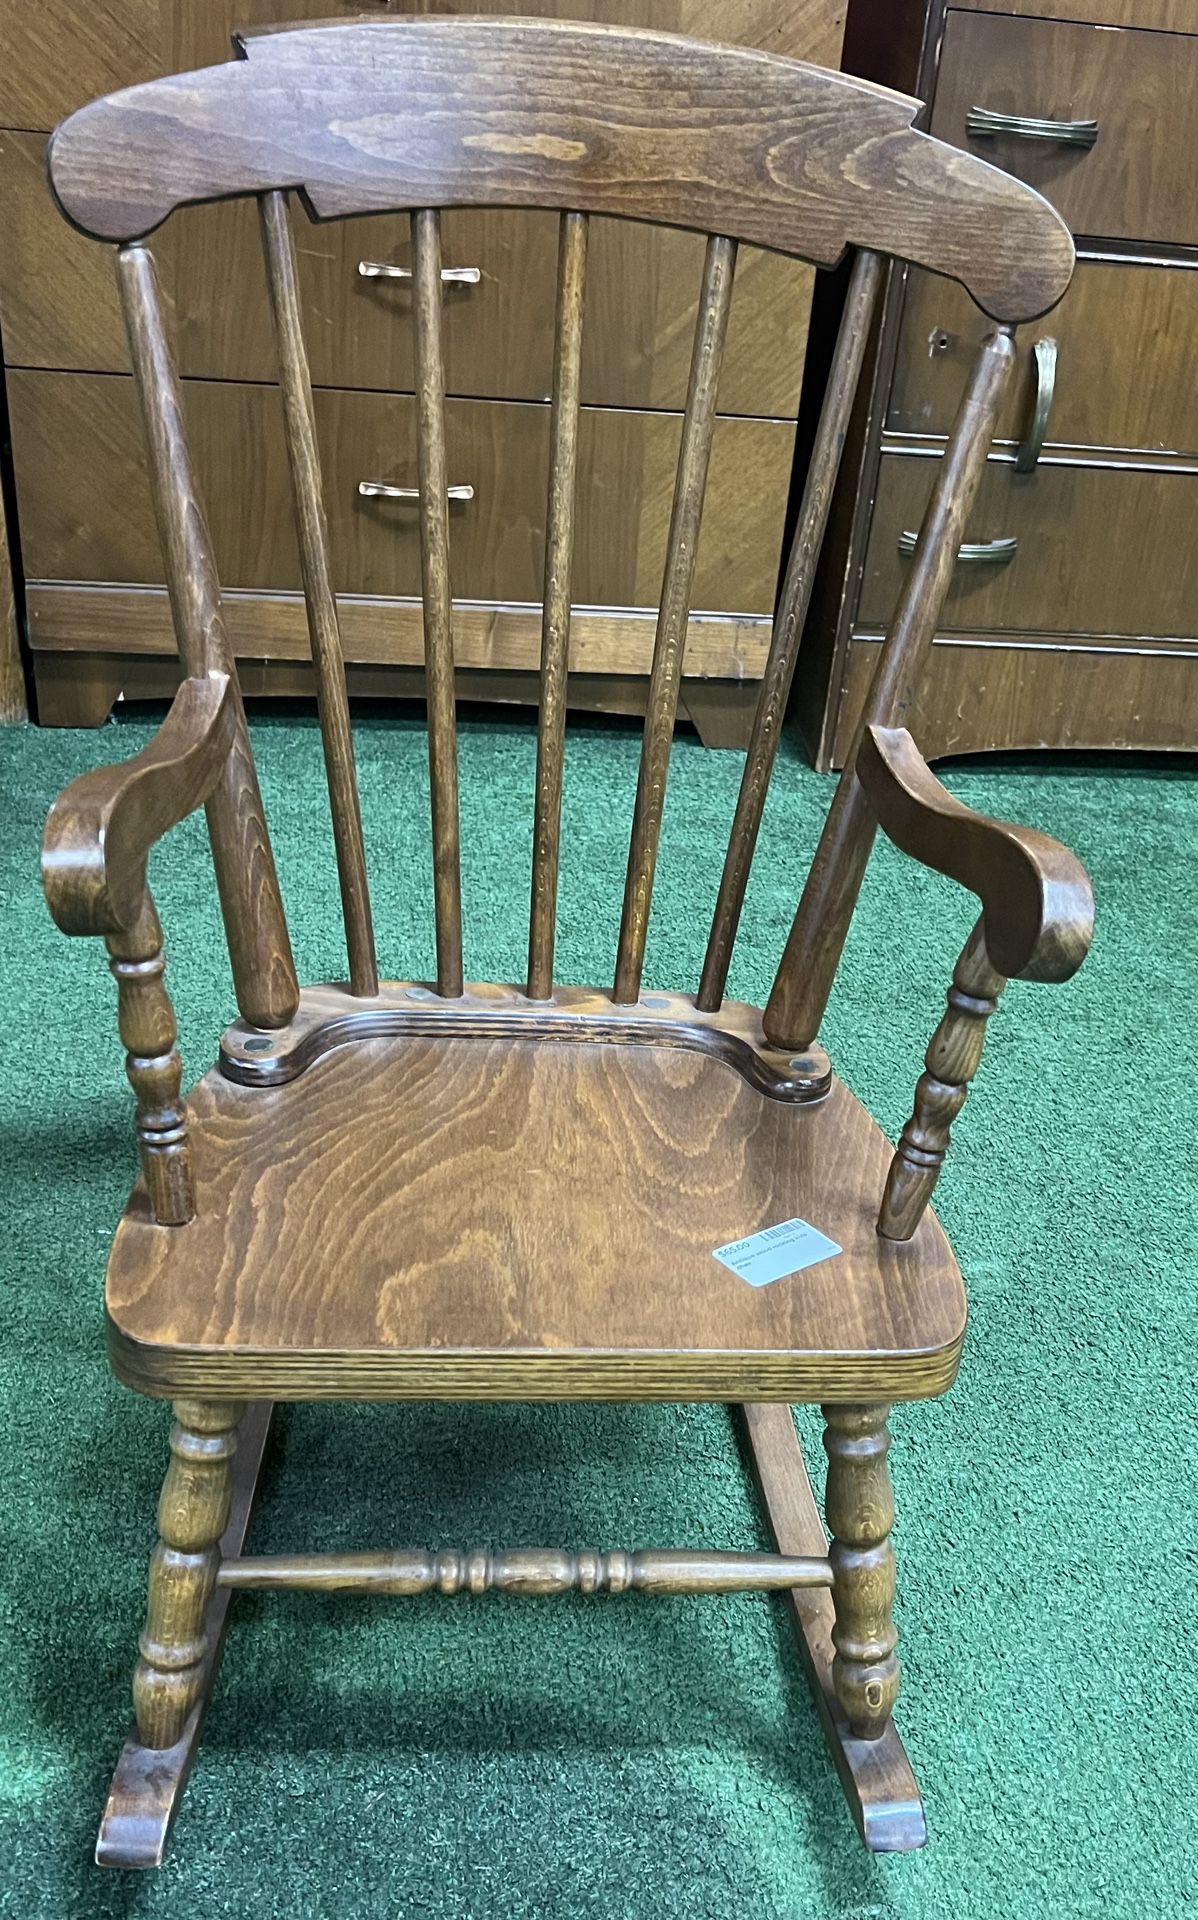 Vintage Child’s Wood Rocking Chair